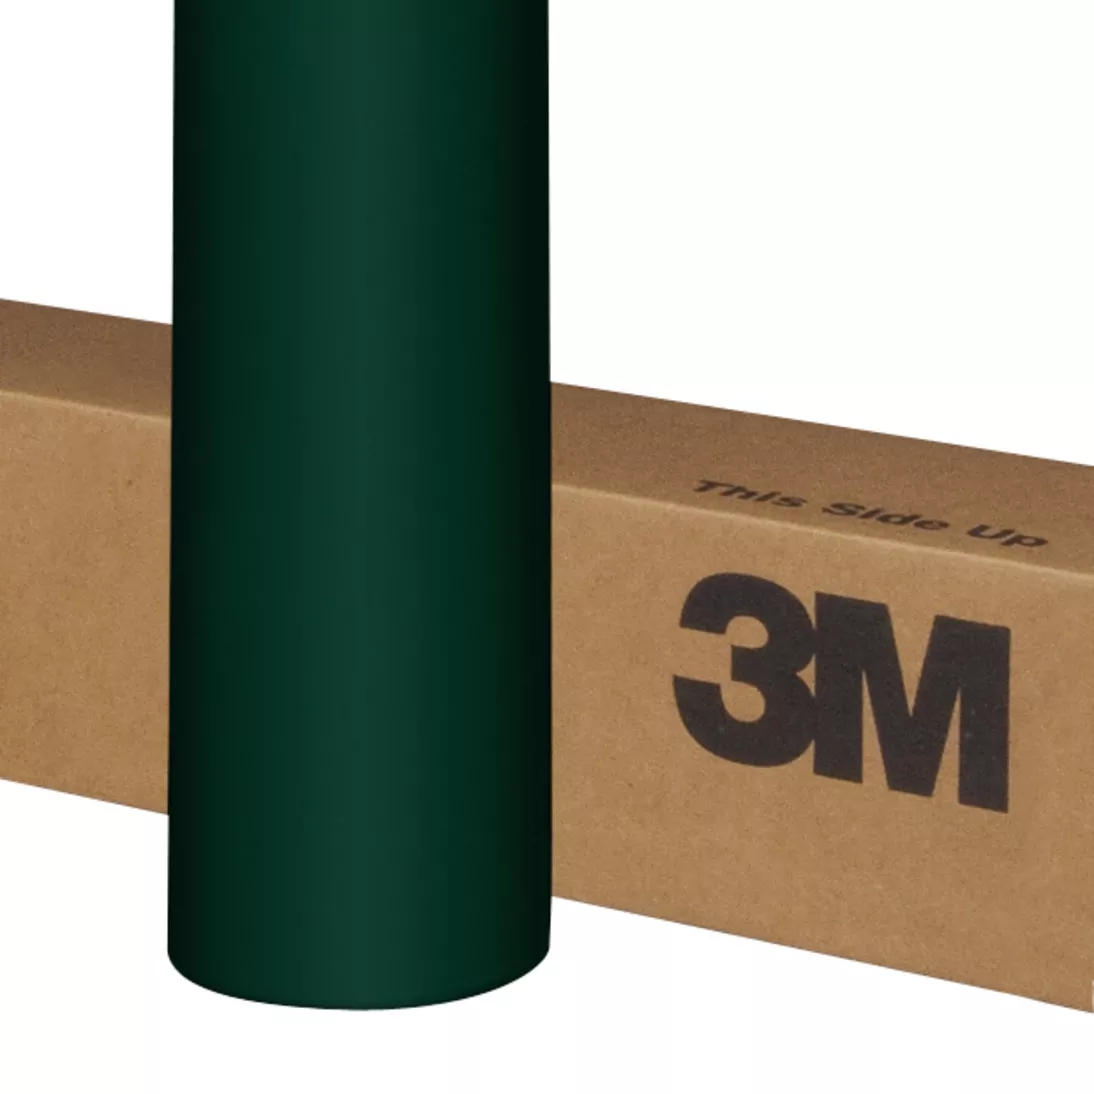 3M™ Scotchlite™ Reflective Graphic Film 5100R-77, Green, 48 in x 50 yd,
1 Roll/Case